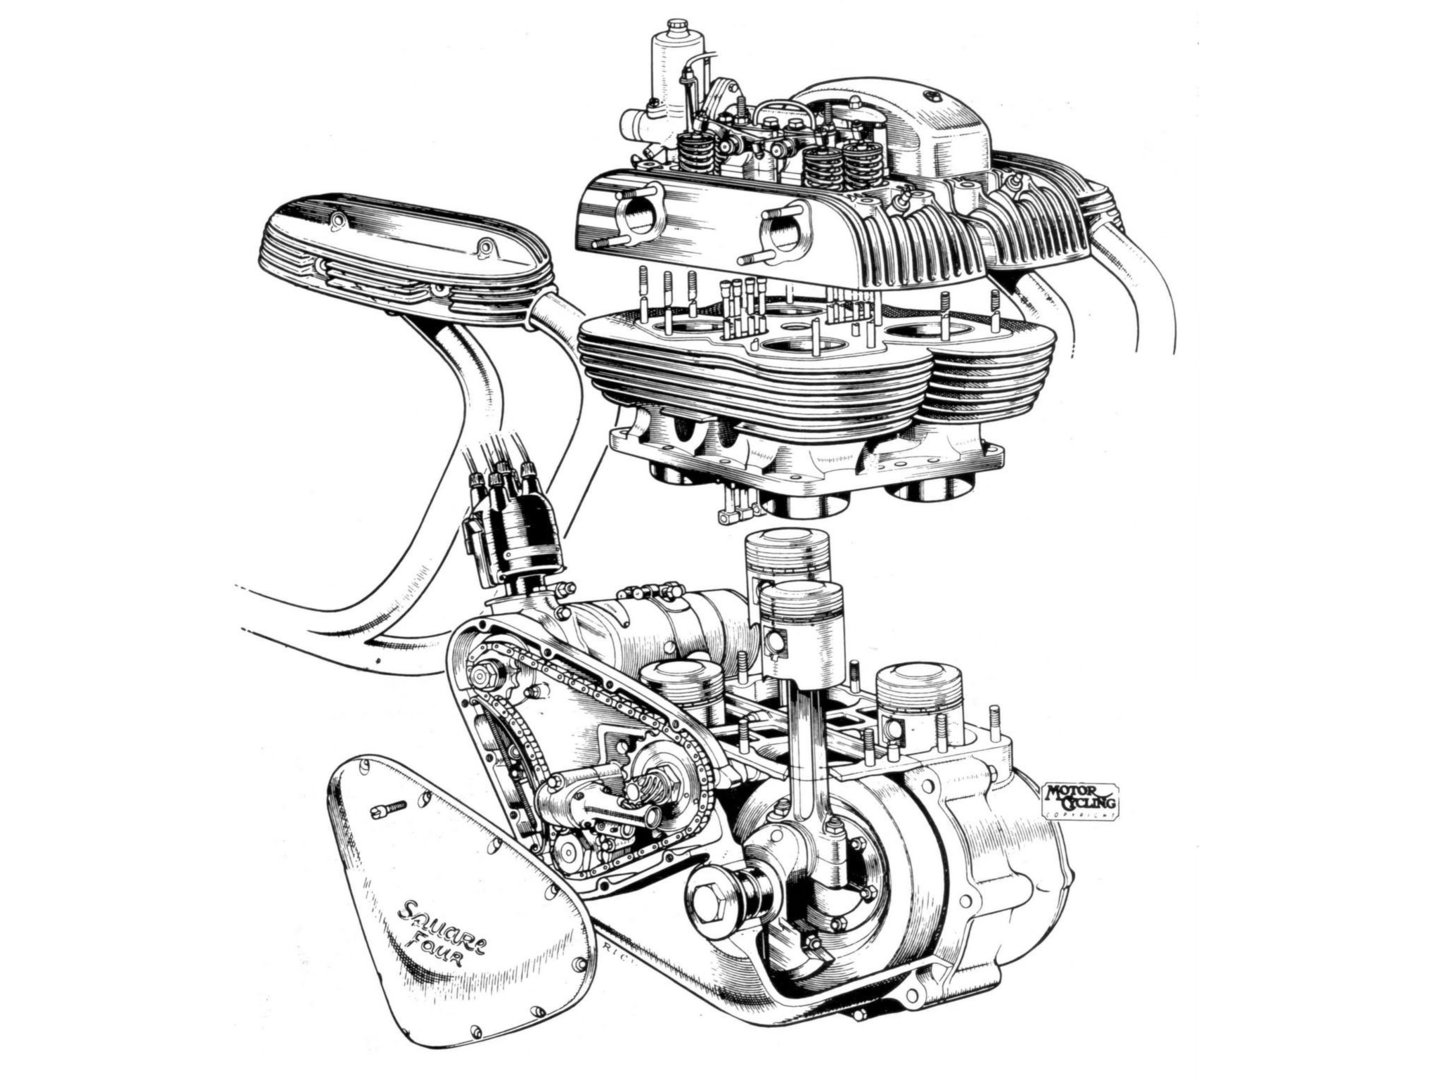 Ariel Square Four Mk II Motor